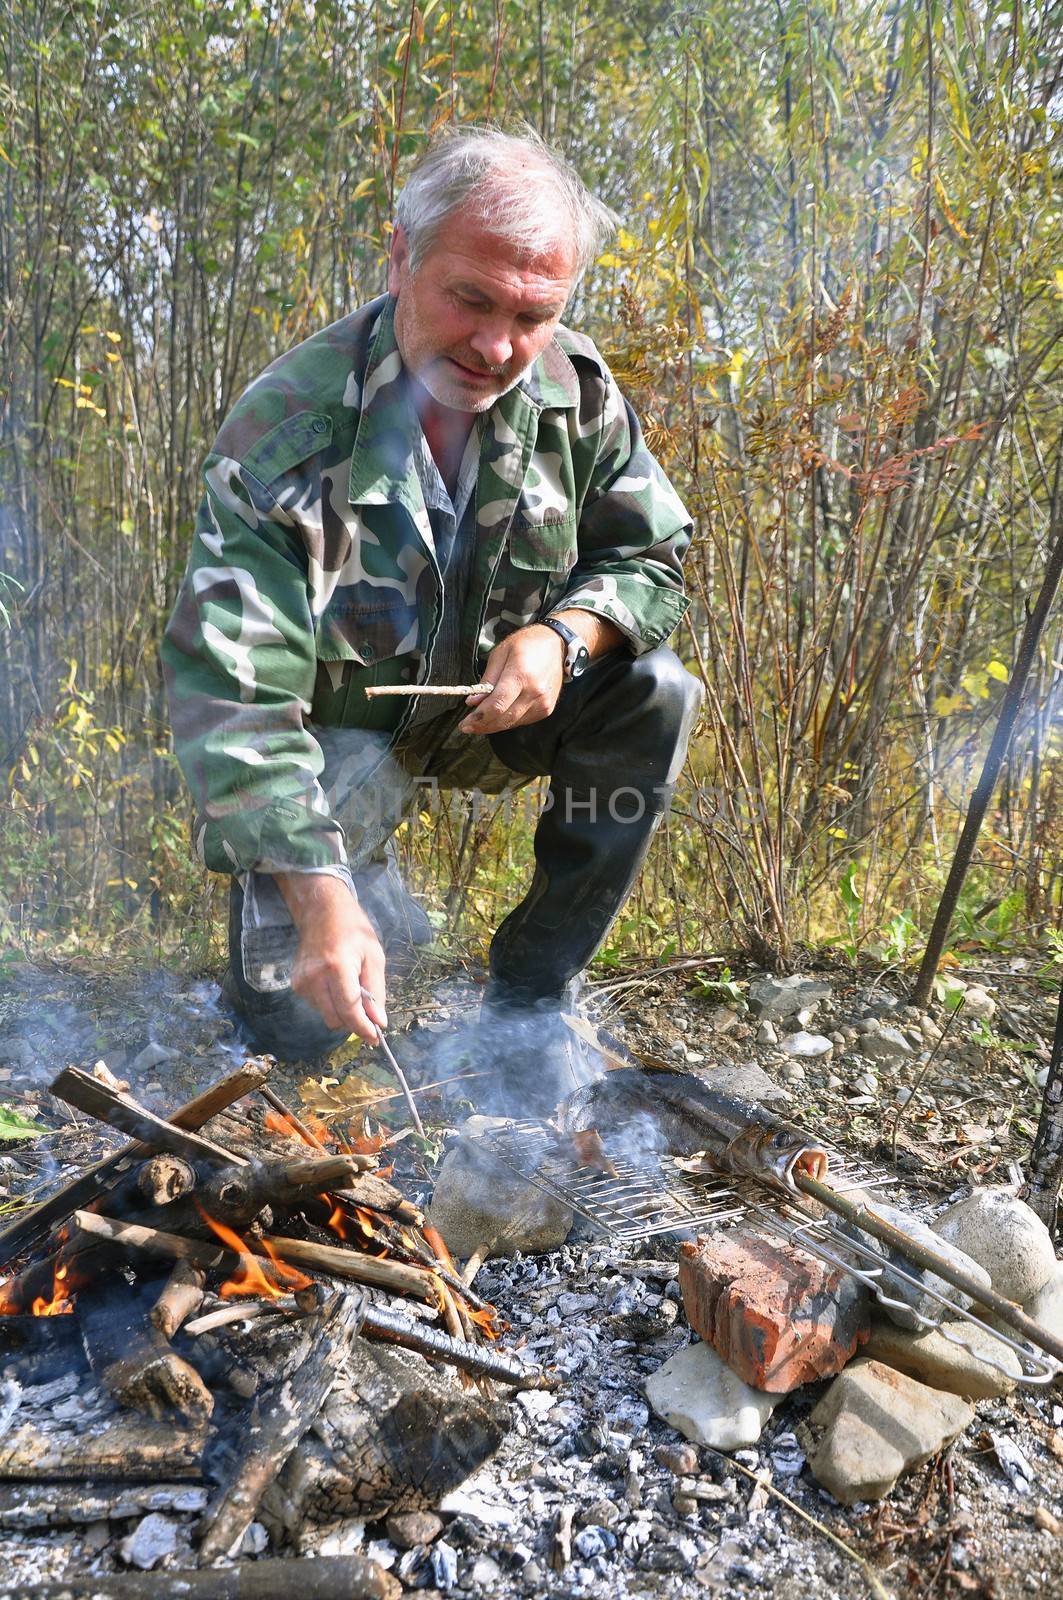 fisherman by the fire roasting fresh fish